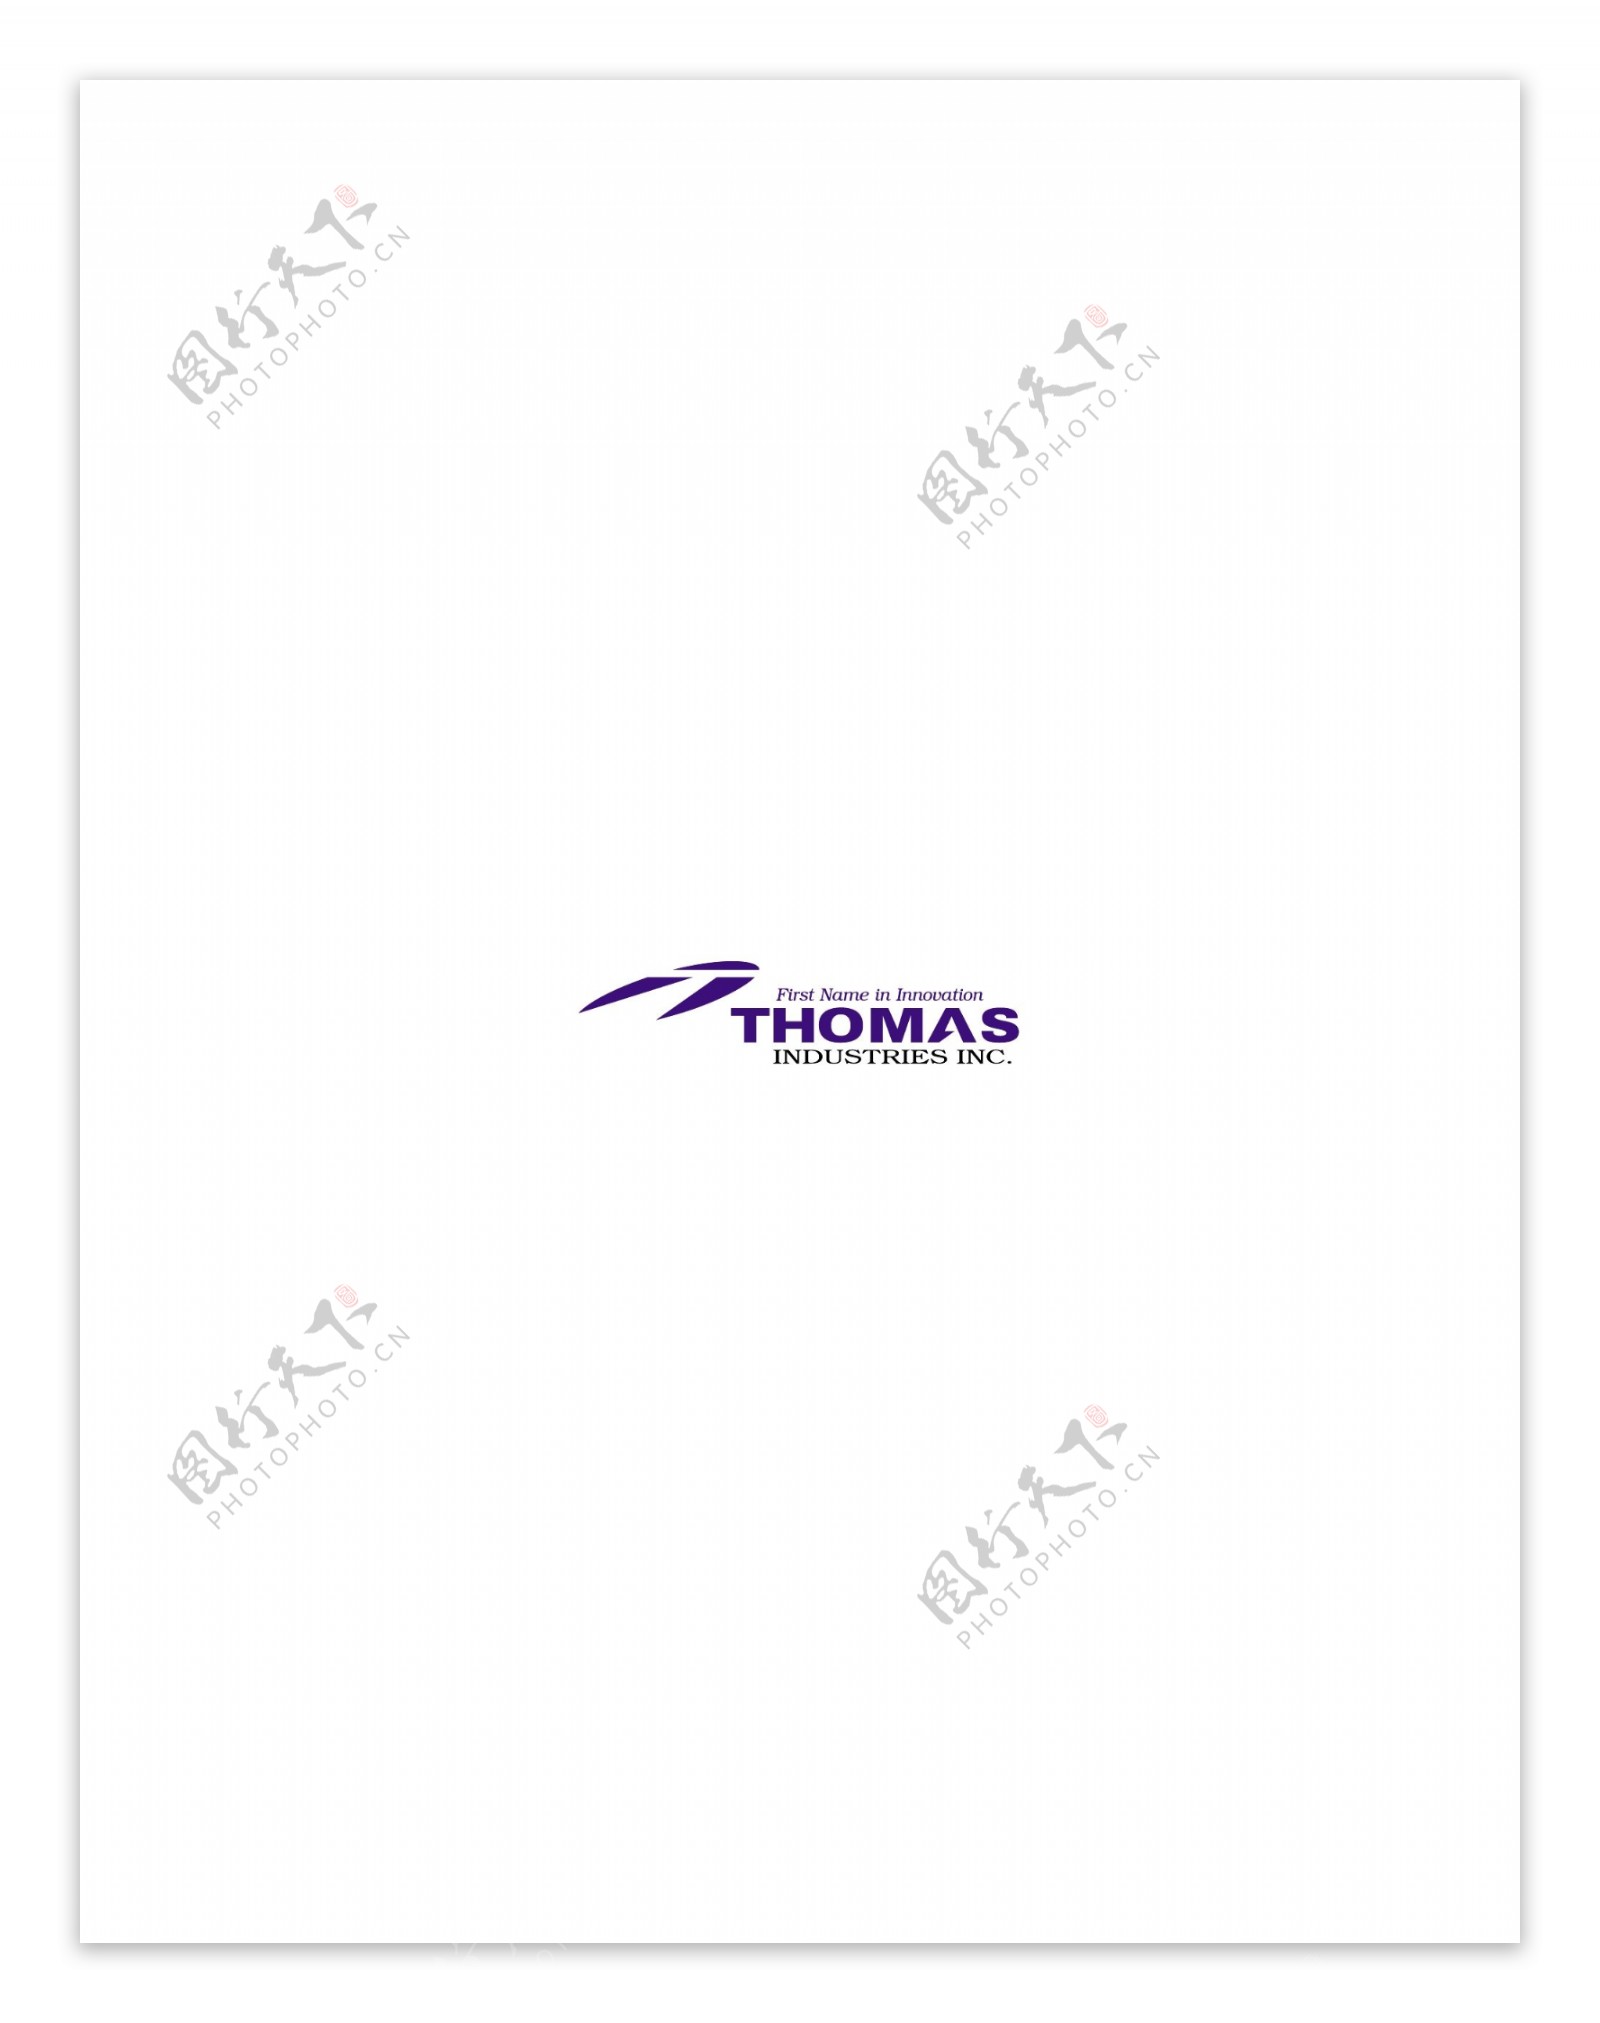 ThomasIndustrieslogo设计欣赏国外知名公司标志范例ThomasIndustries下载标志设计欣赏